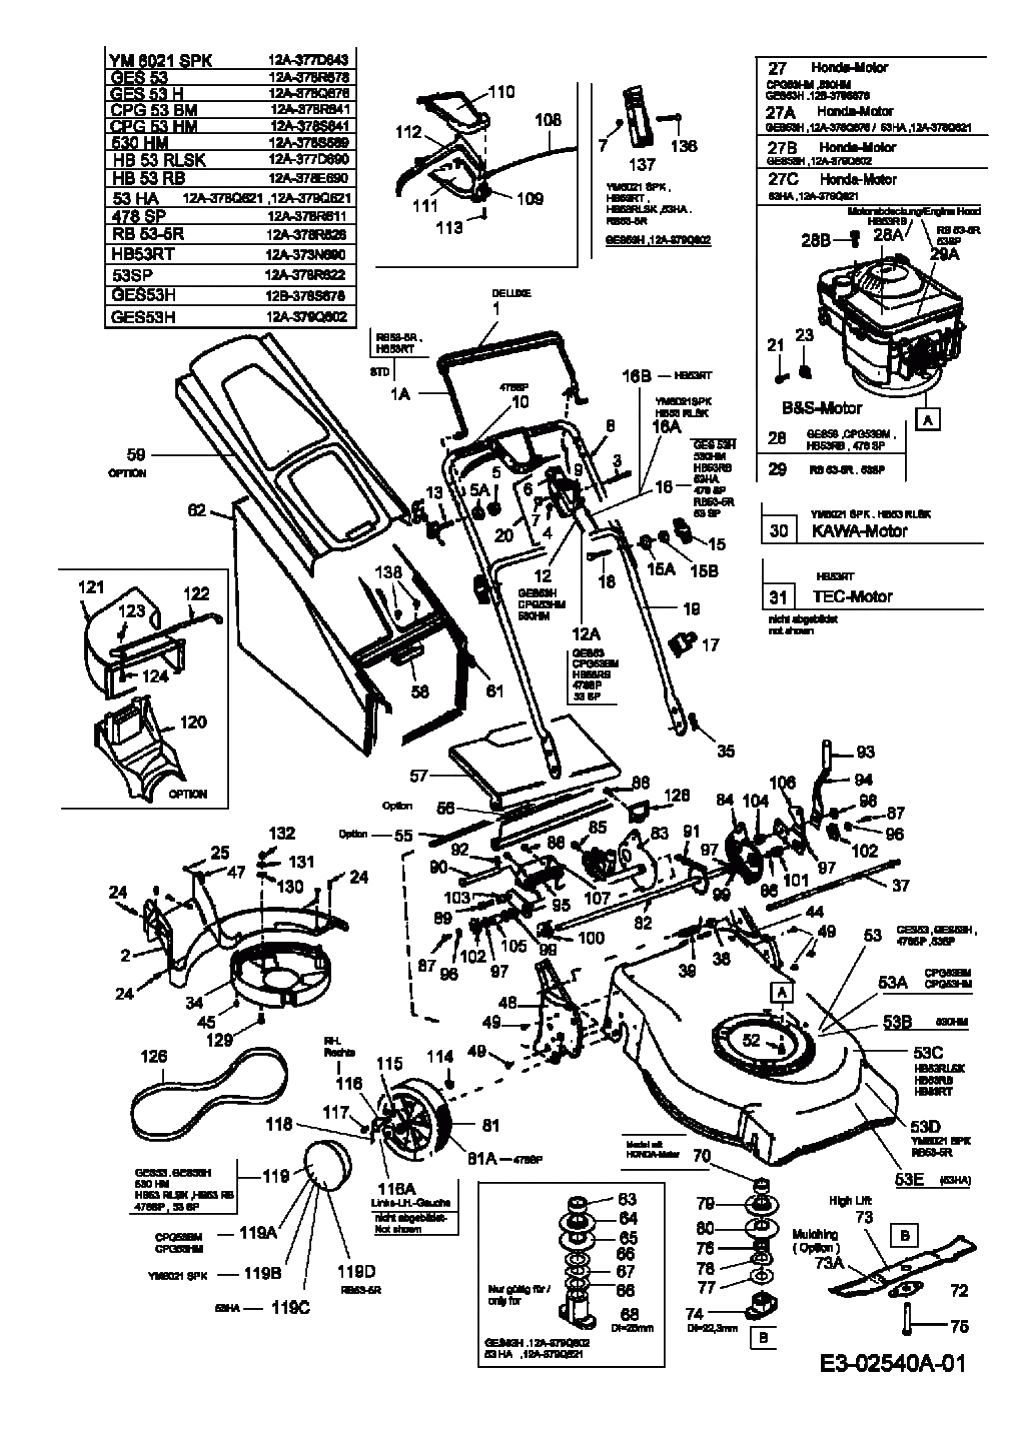 MTD Артикул 12A-378R678 (год выпуска 2005). Основная деталировка